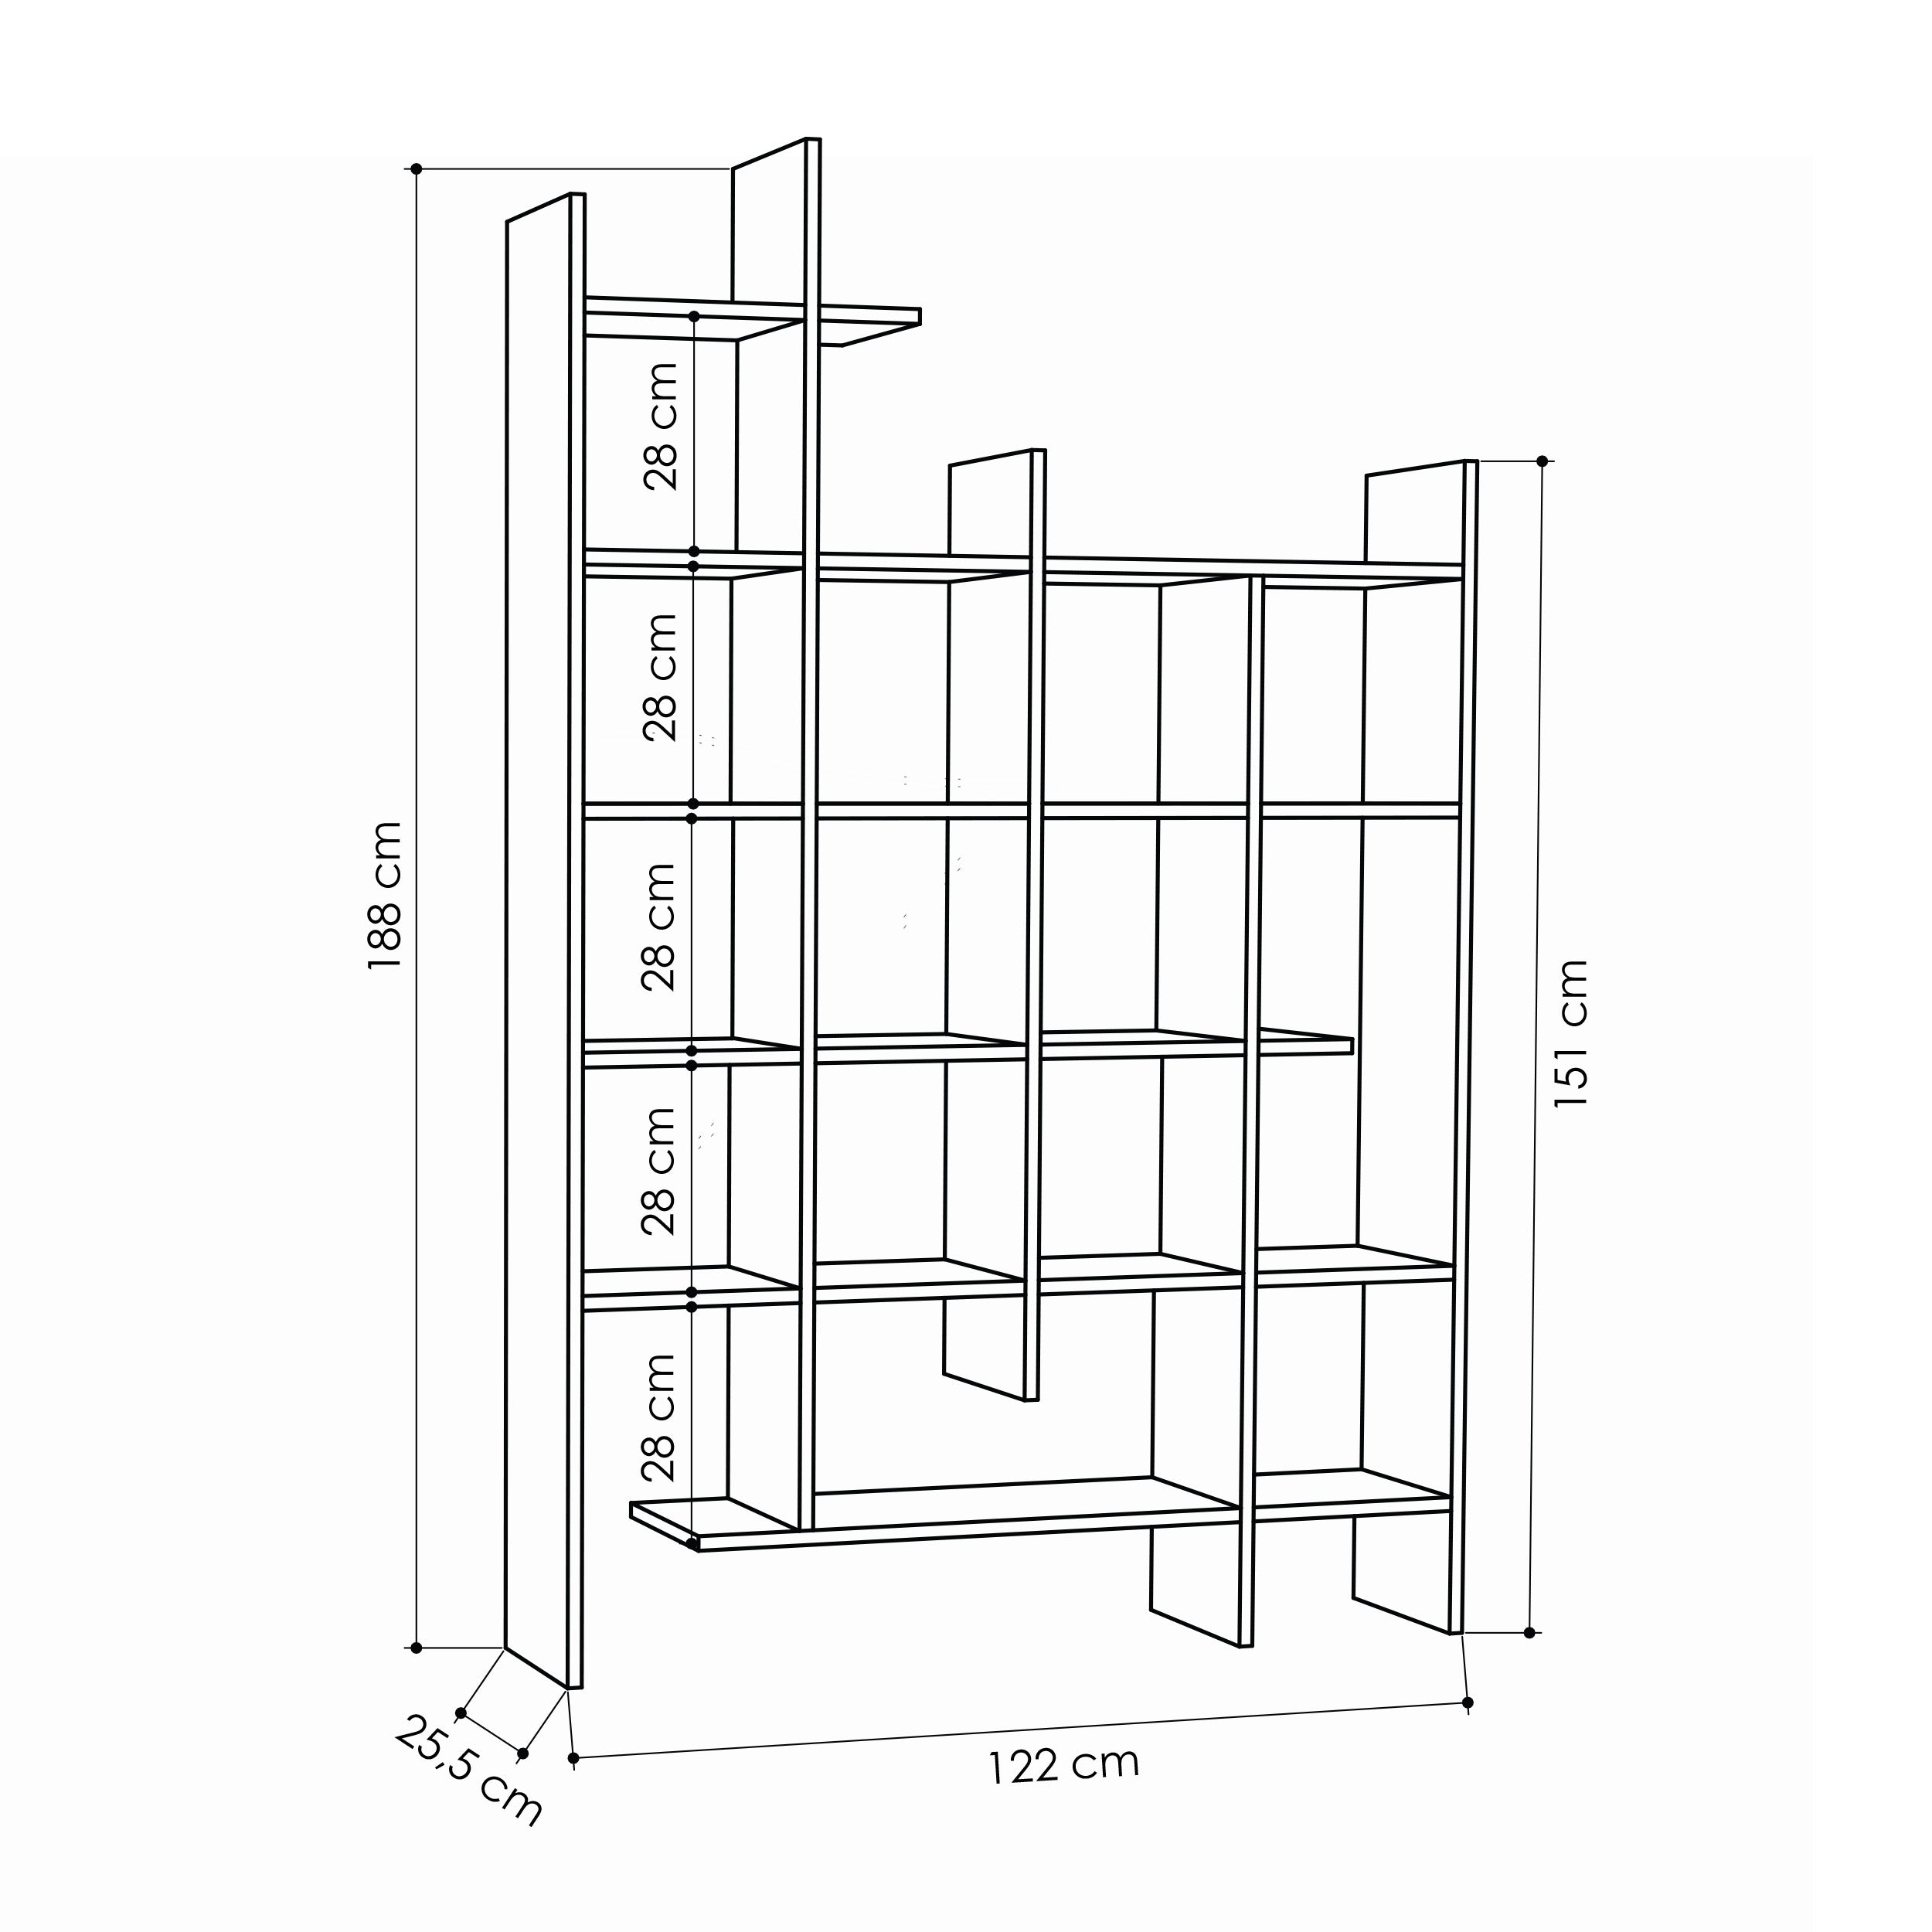 Manco Modern Bookcase Display Unit Room Separator Tall 188cm - Decortie